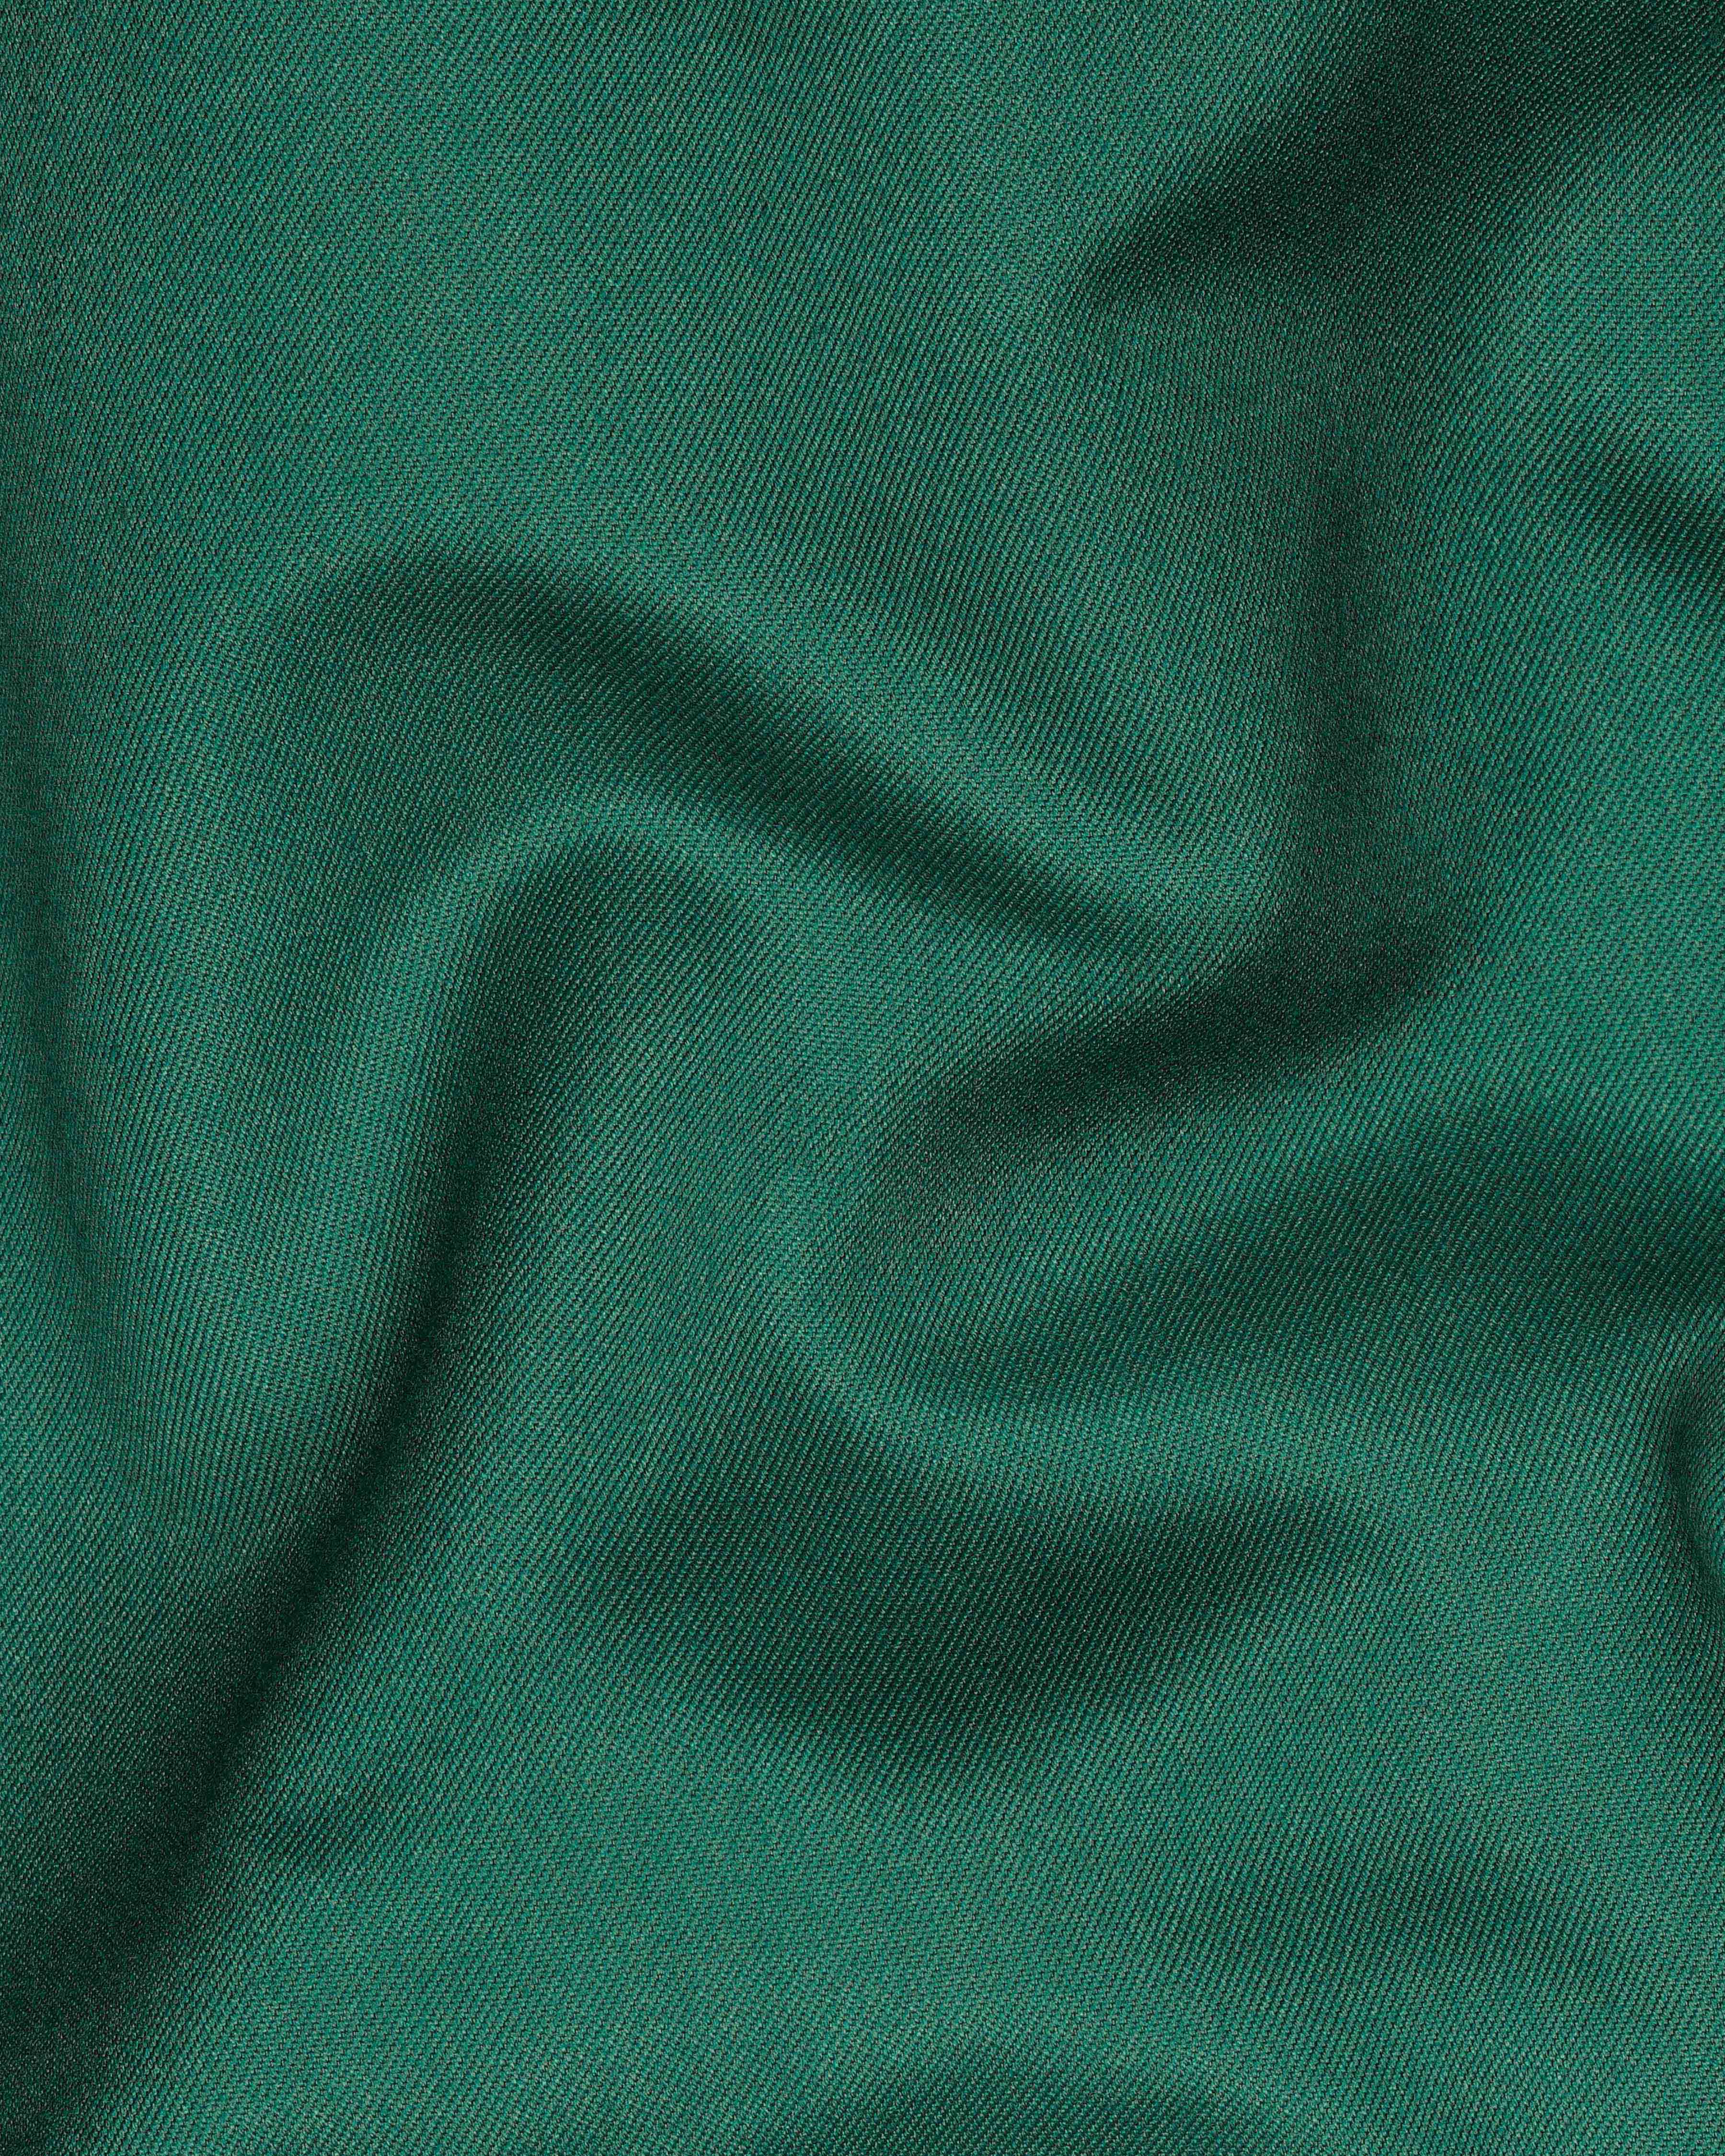 Stromboli Green Pant T2037-28, T2037-30, T2037-32, T2037-34, T2037-36, T2037-38, T2037-40, T2037-42, T2037-44	 